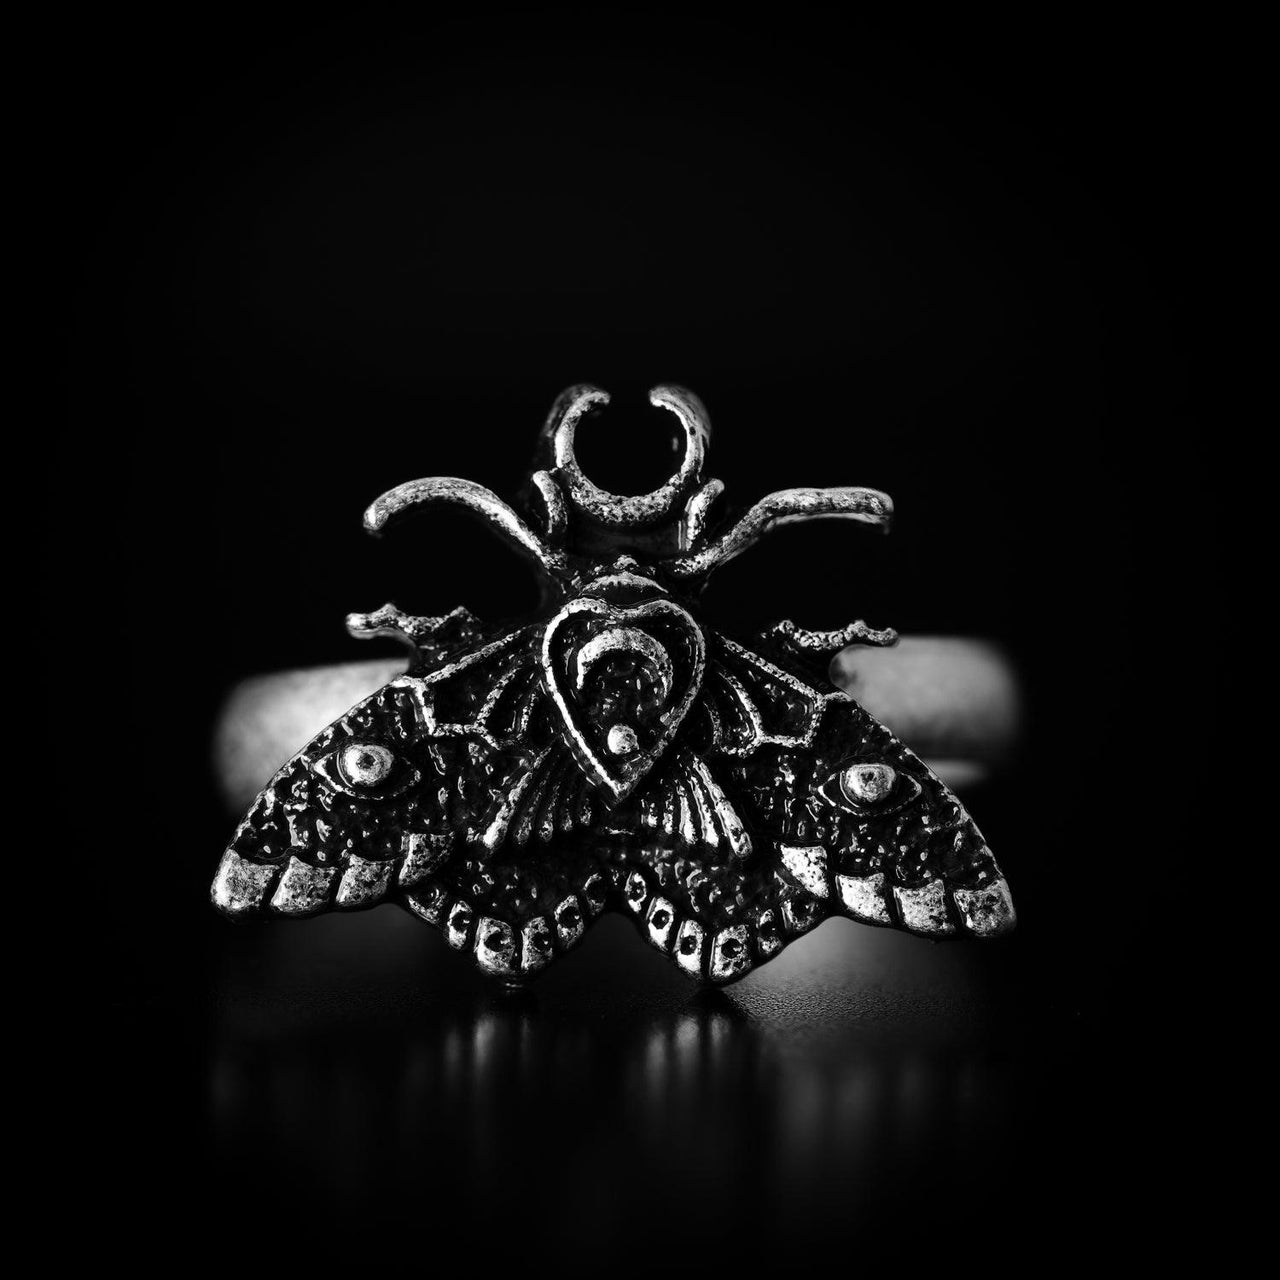 Celestial Moth Ring - Black Feather Design